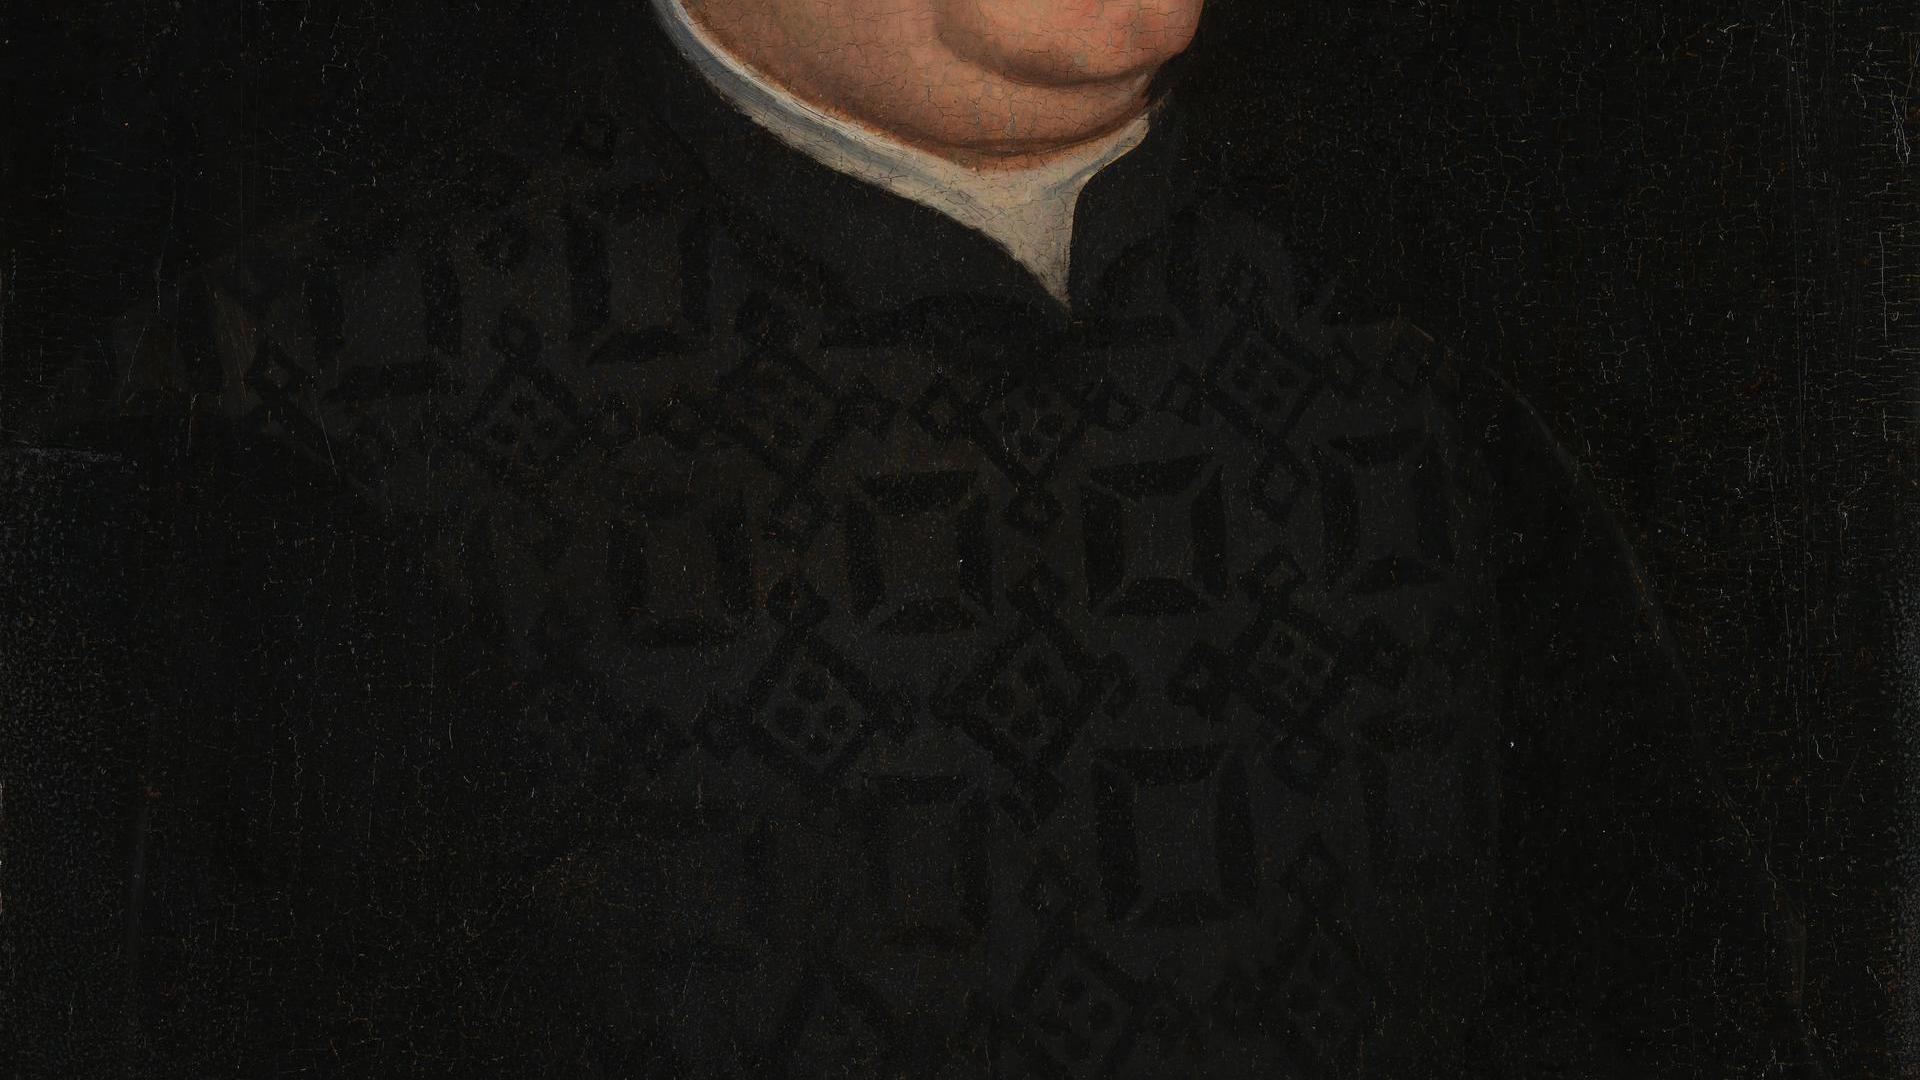 Portrait of Johannes Feige by Lucas Cranach the Elder